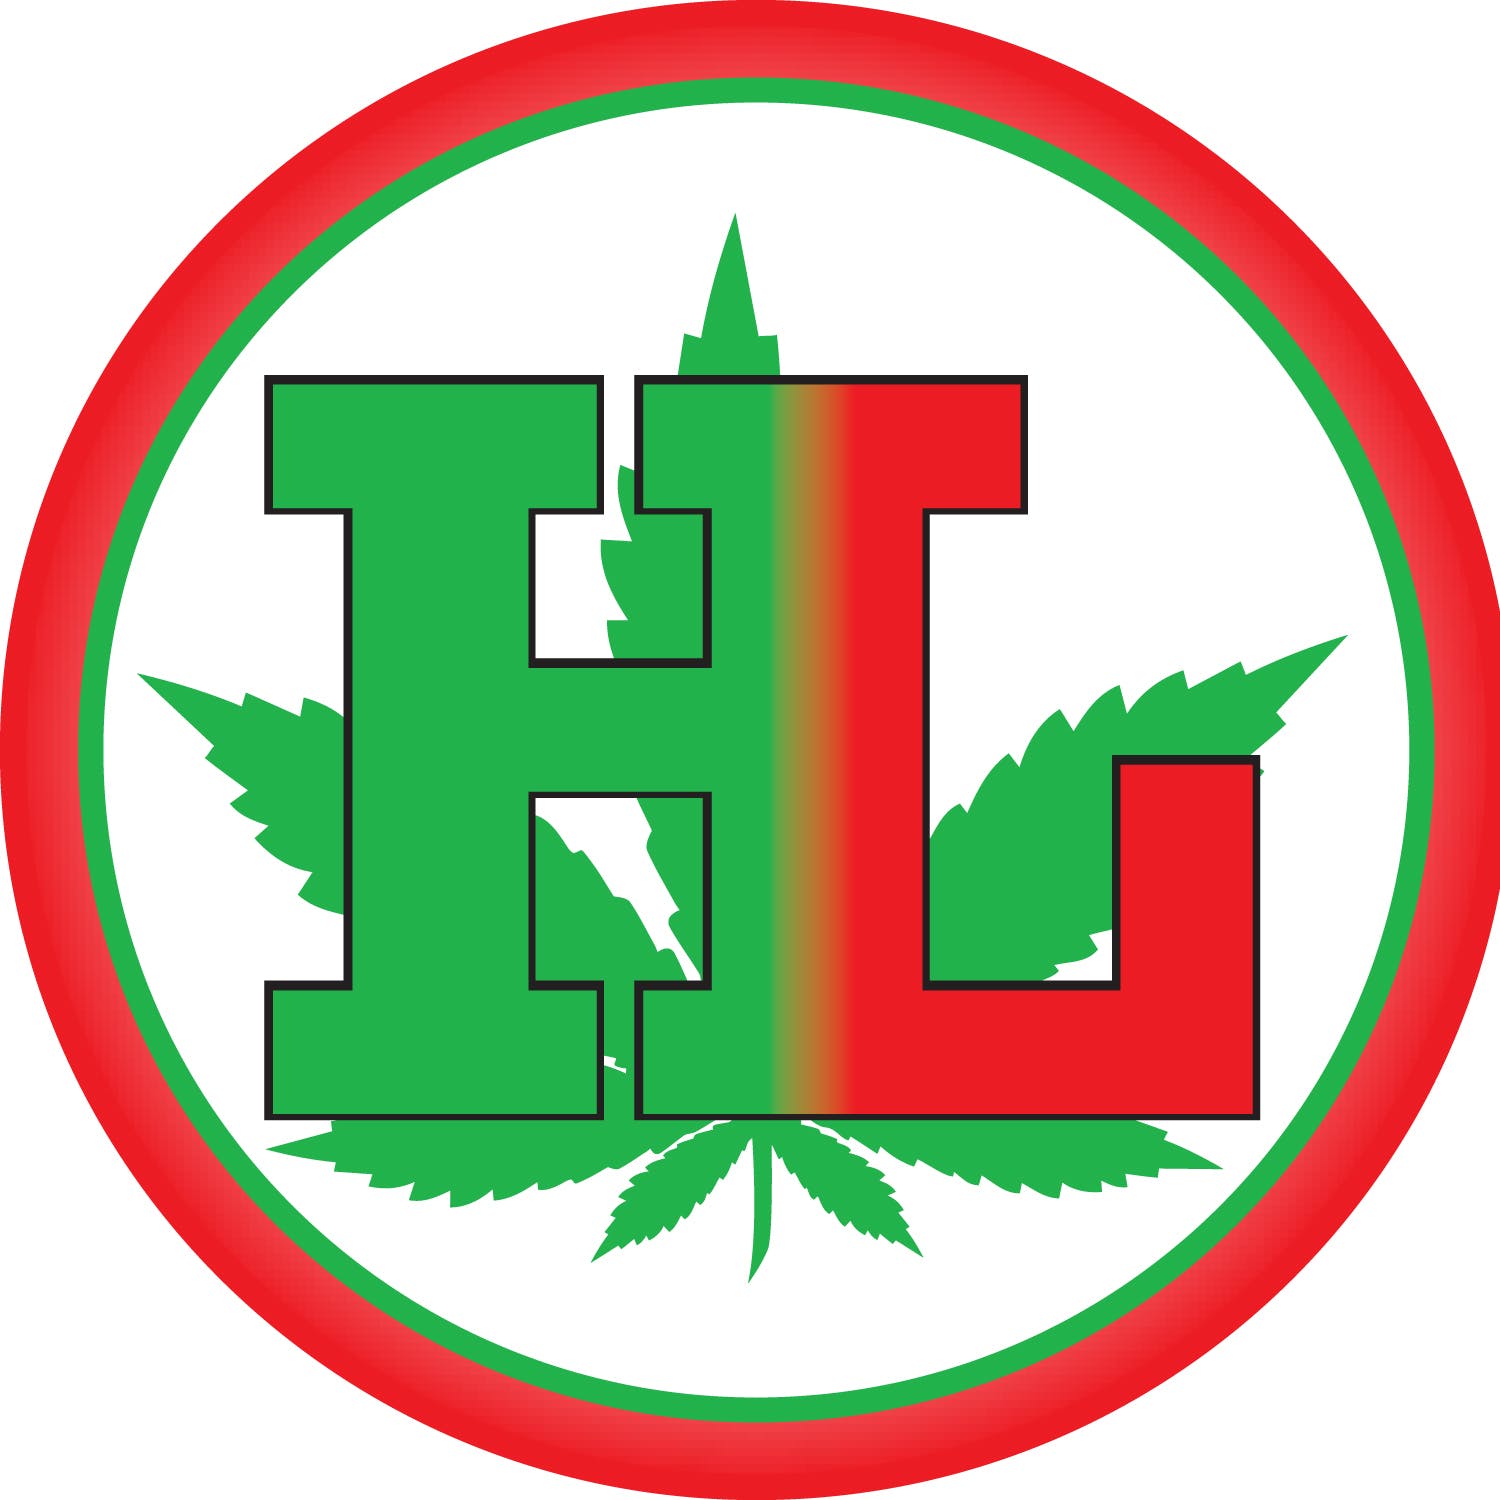 Higher Level 64 - Medical Marijuana Doctors - Cannabizme.com